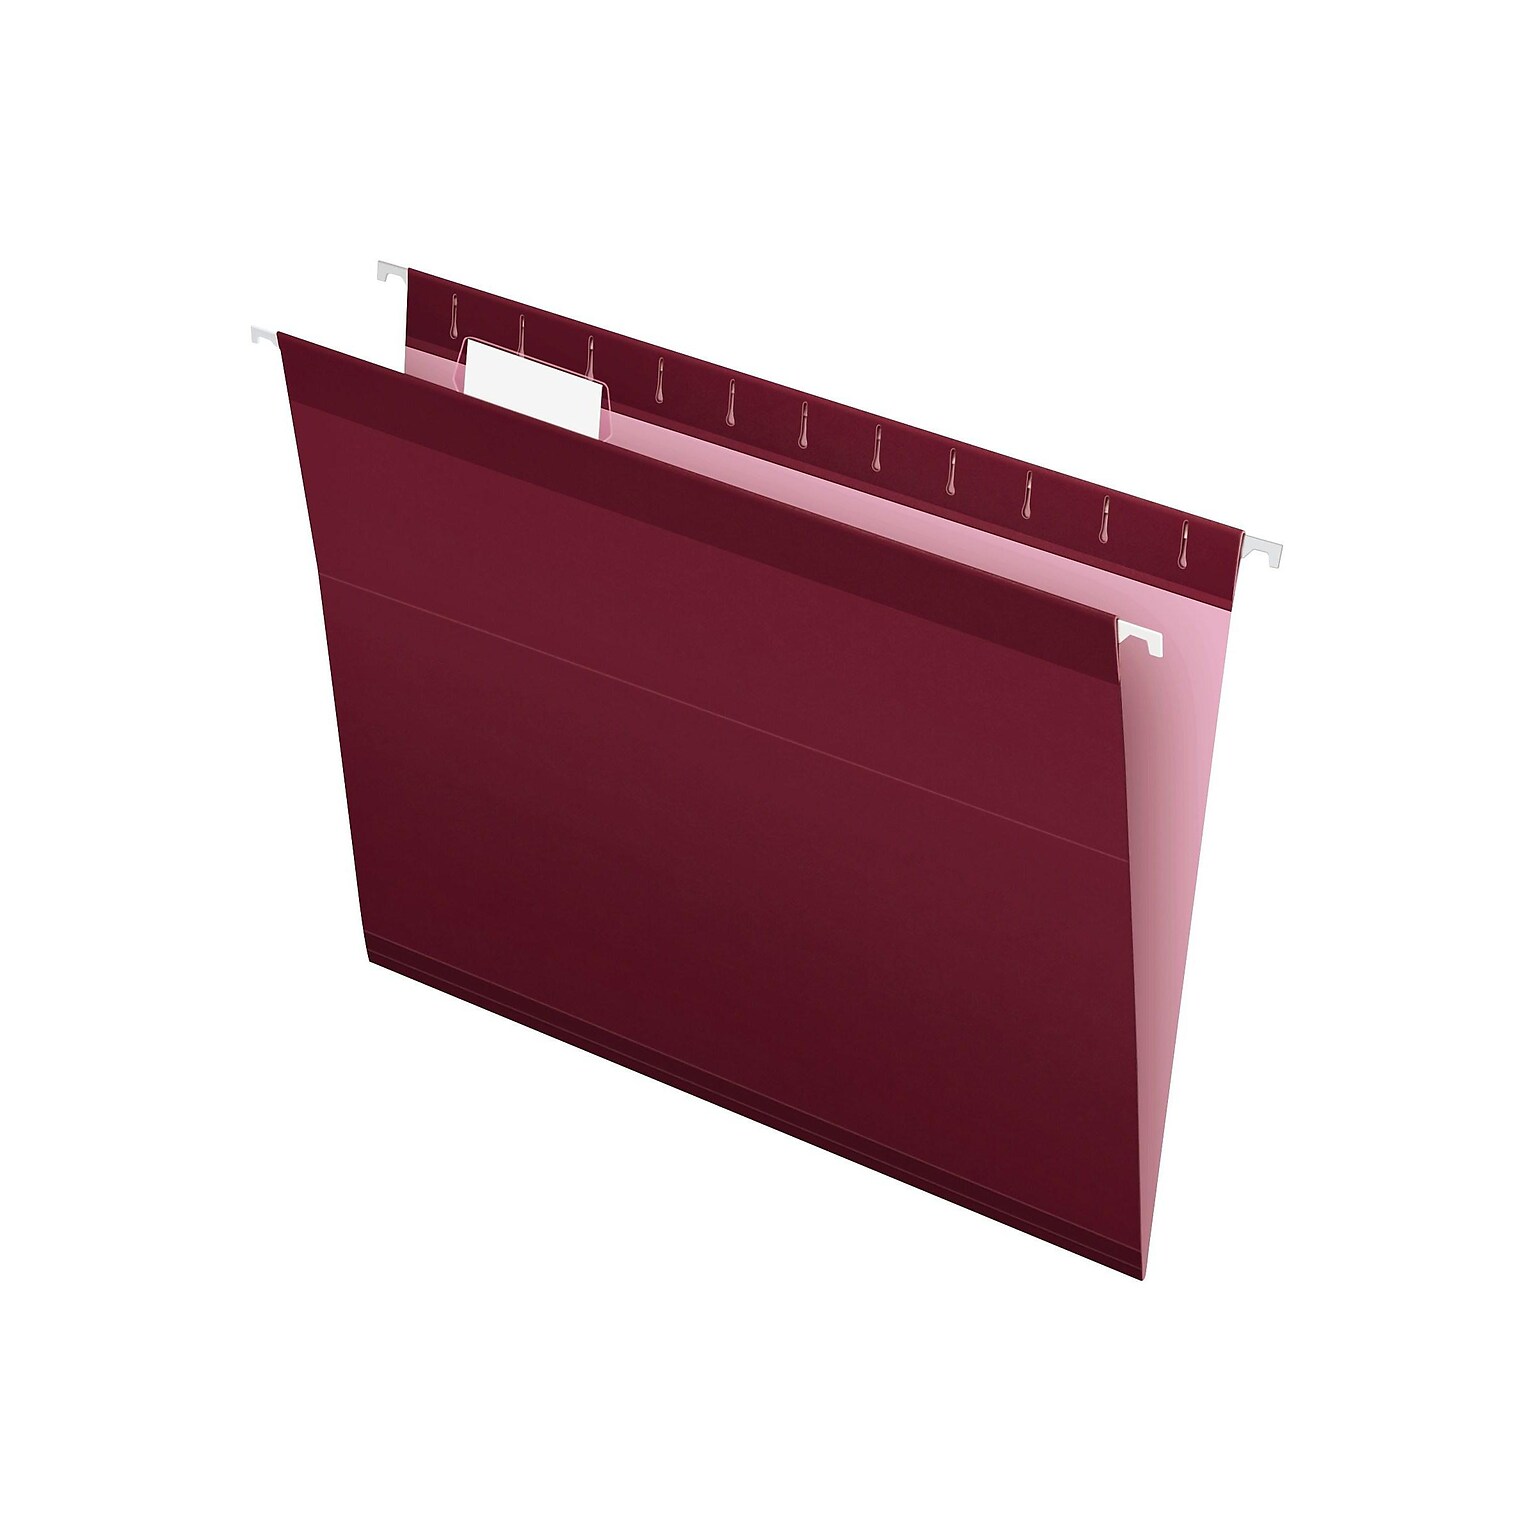 Pendaflex Reinforced Hanging File Folders, 1/5 Tab, Letter Size, Burgundy, 25/Box (PFX 4152 1/5 BUR)